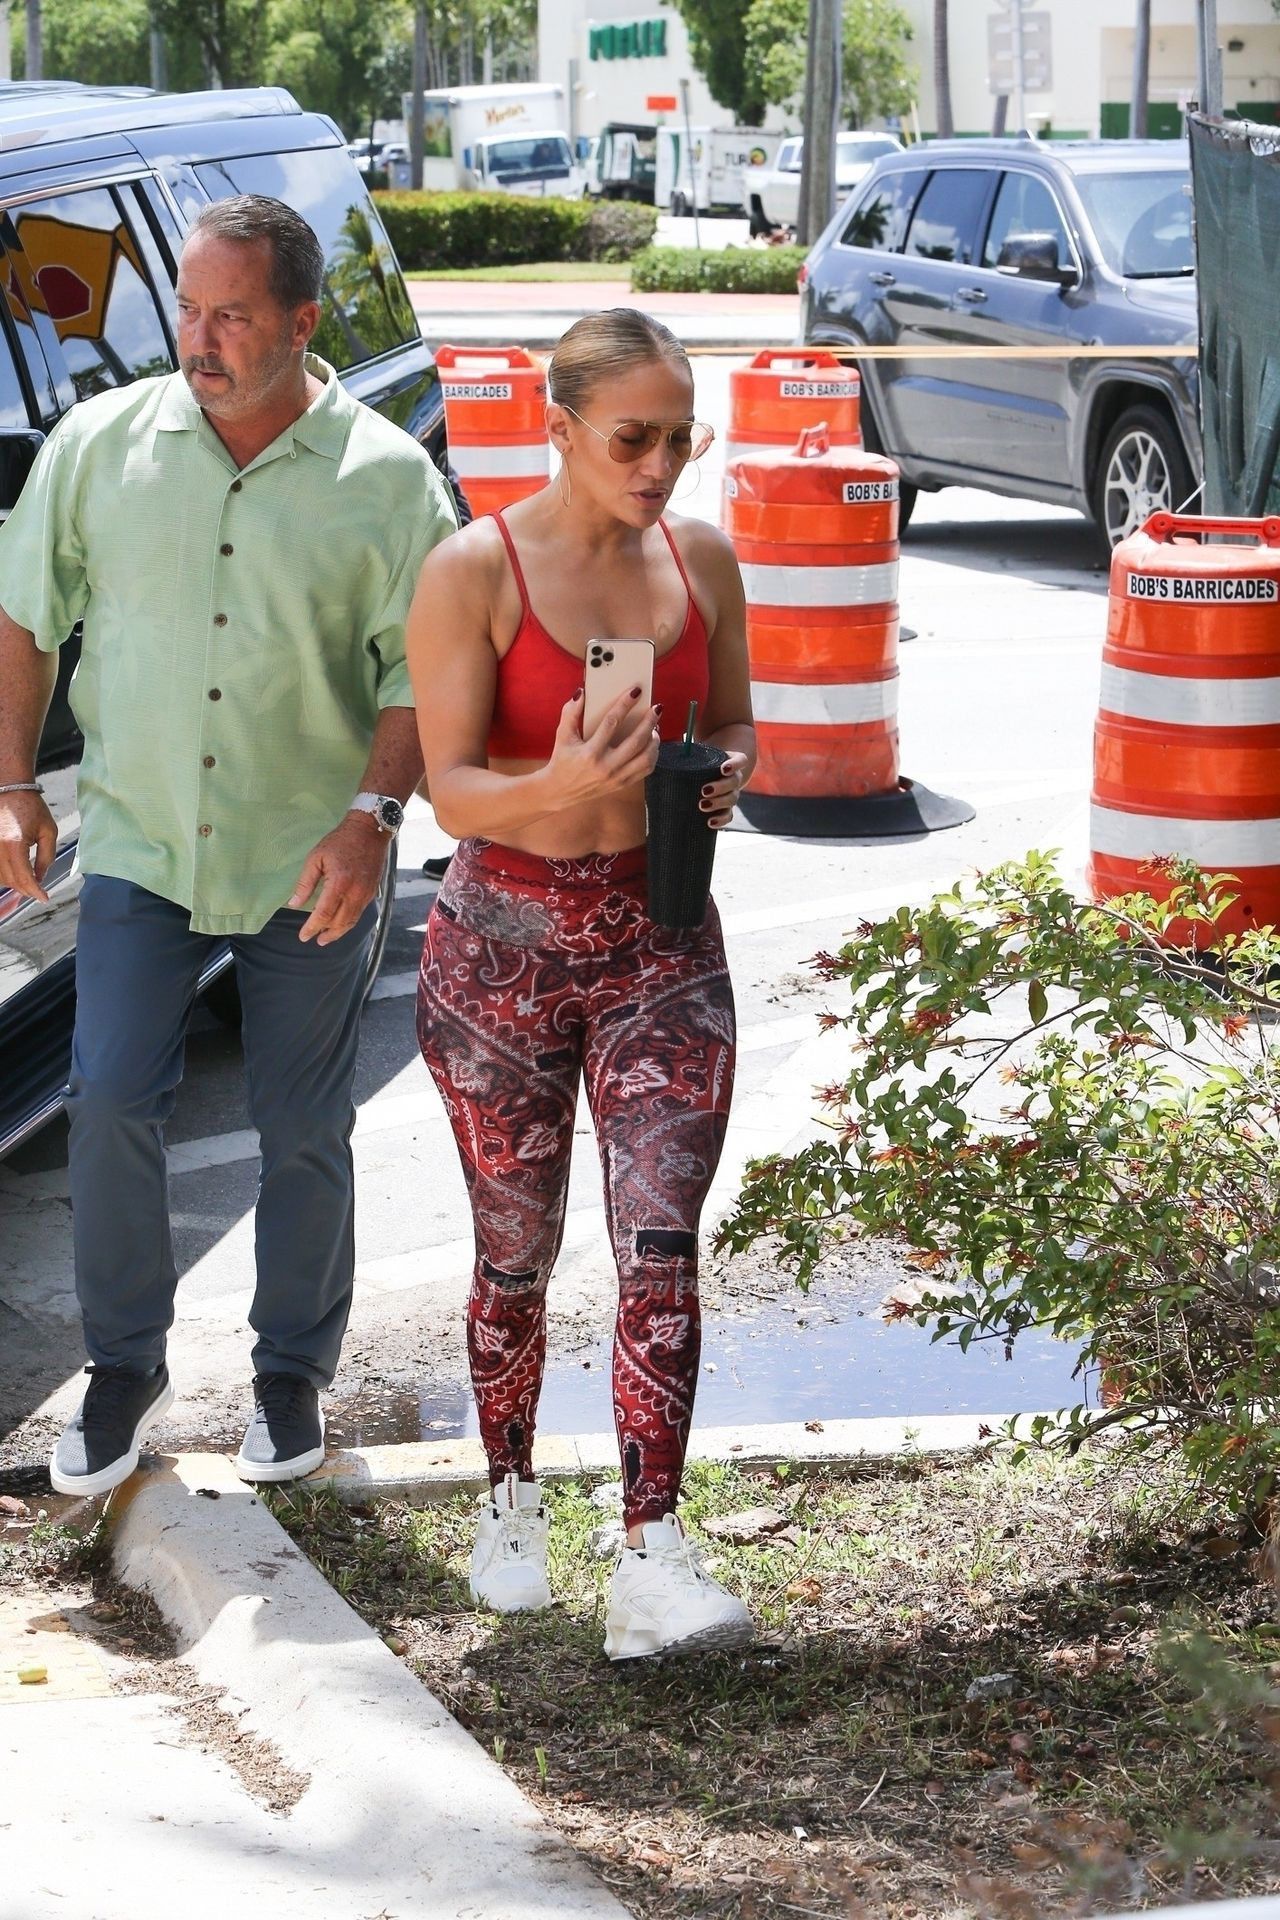 Jennifer-Lopez-Sexy-The-Fappening-Blog-5.jpg